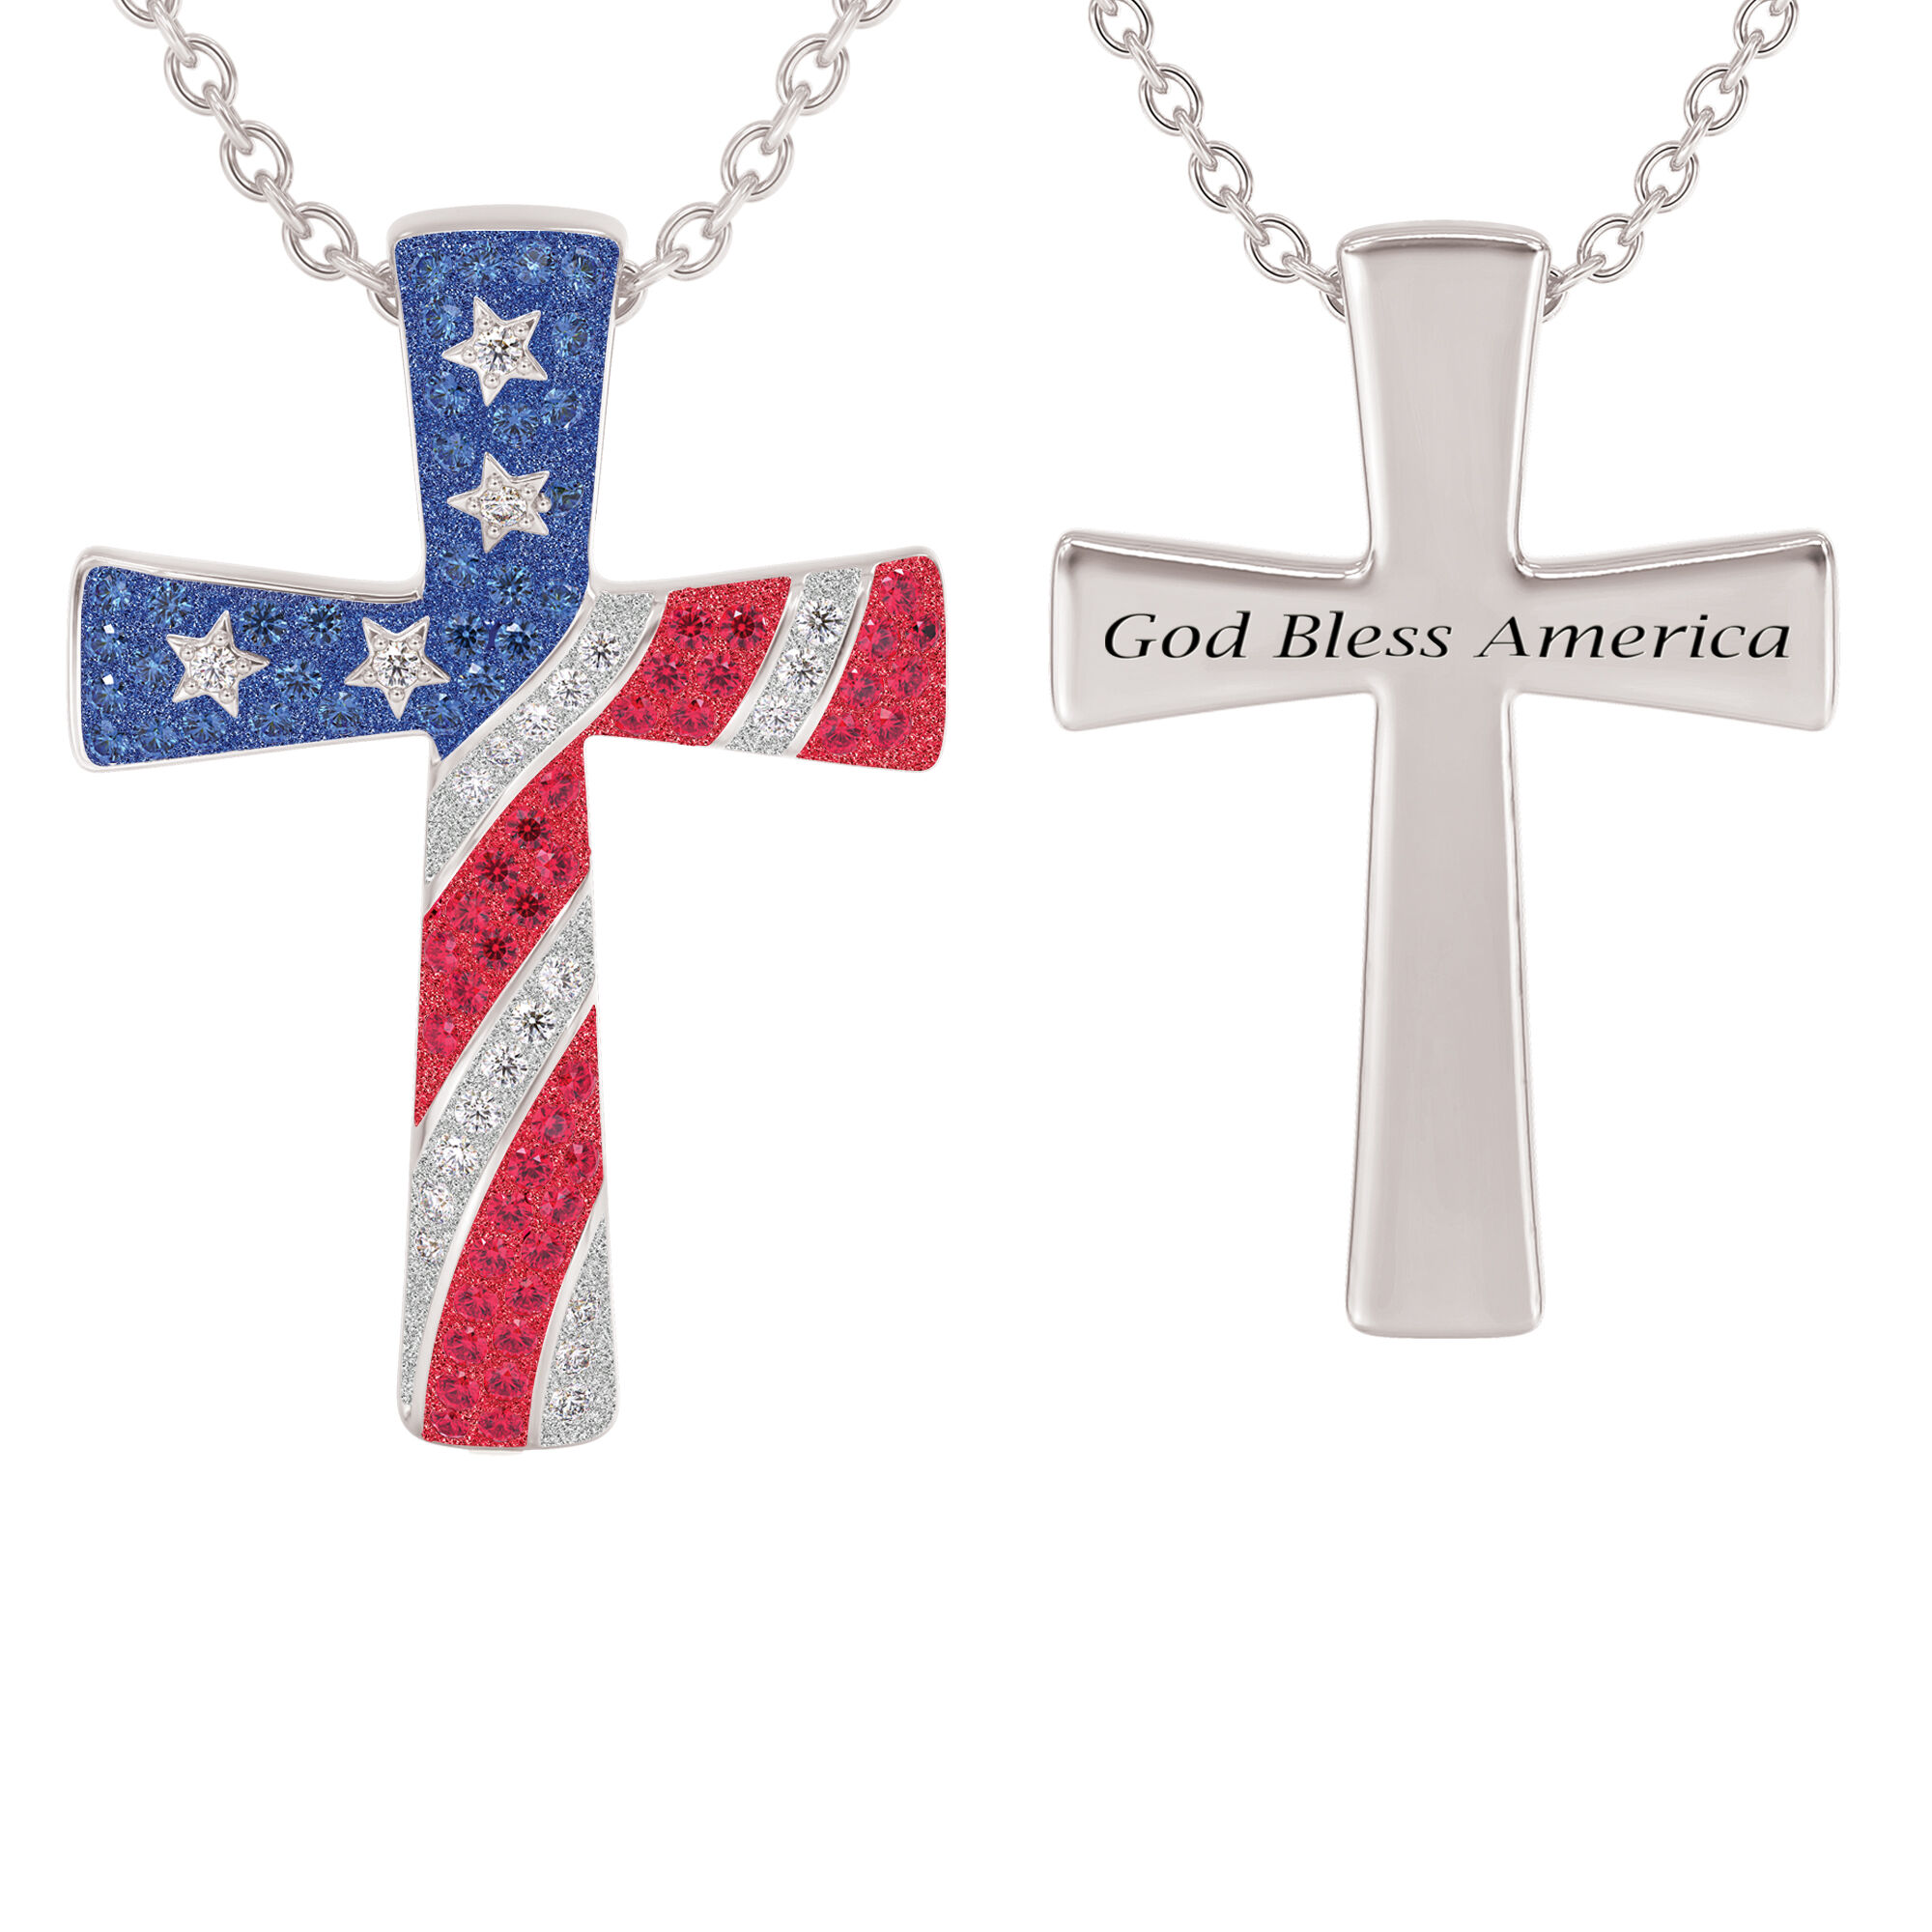 God Bless America Cross Pendant 10198 0019 a main